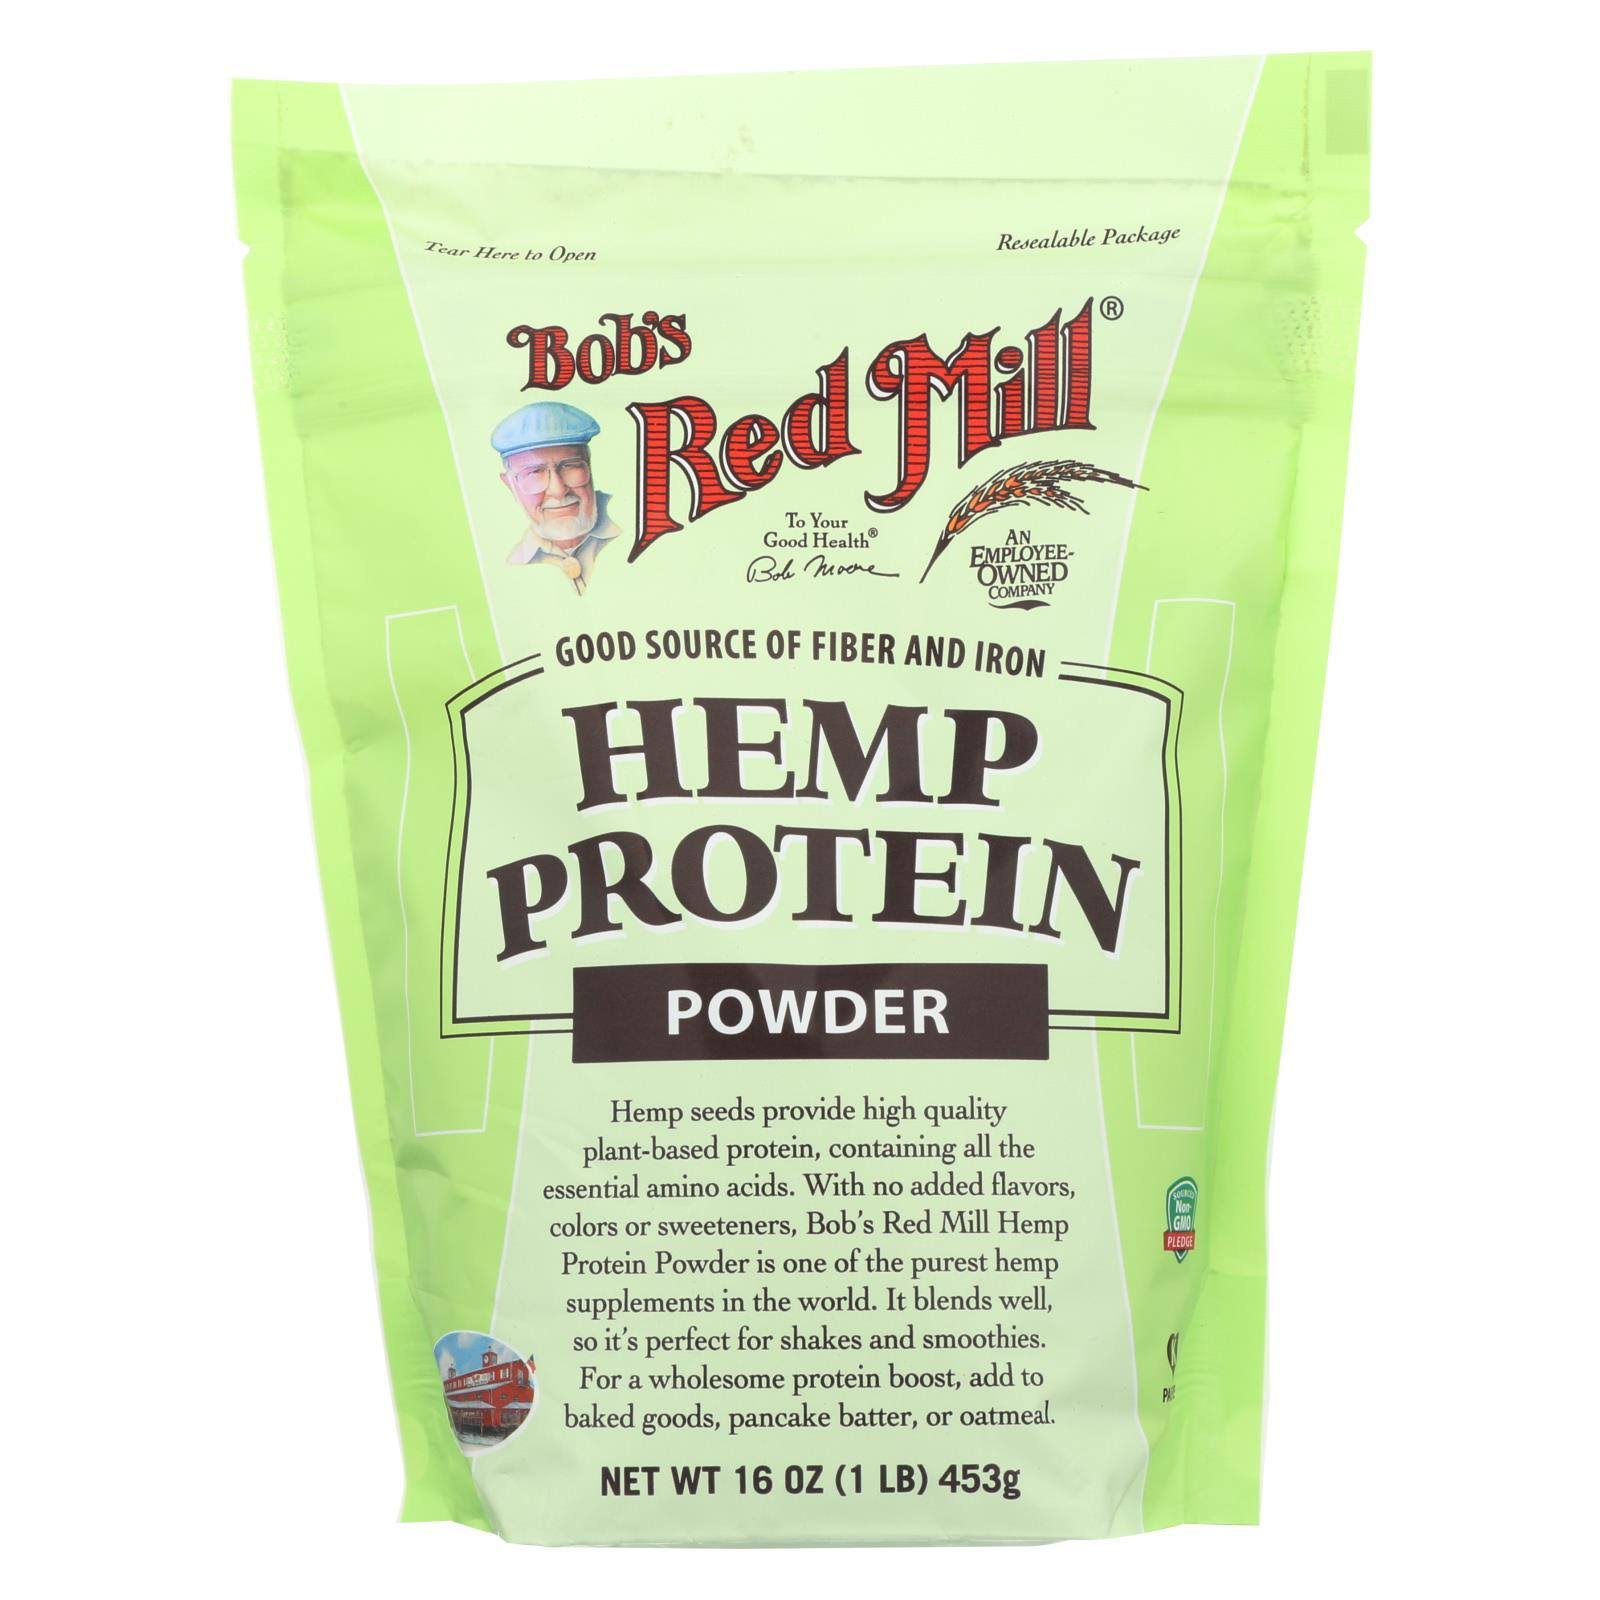 Bob's Red Mill Hemp Protein Powder